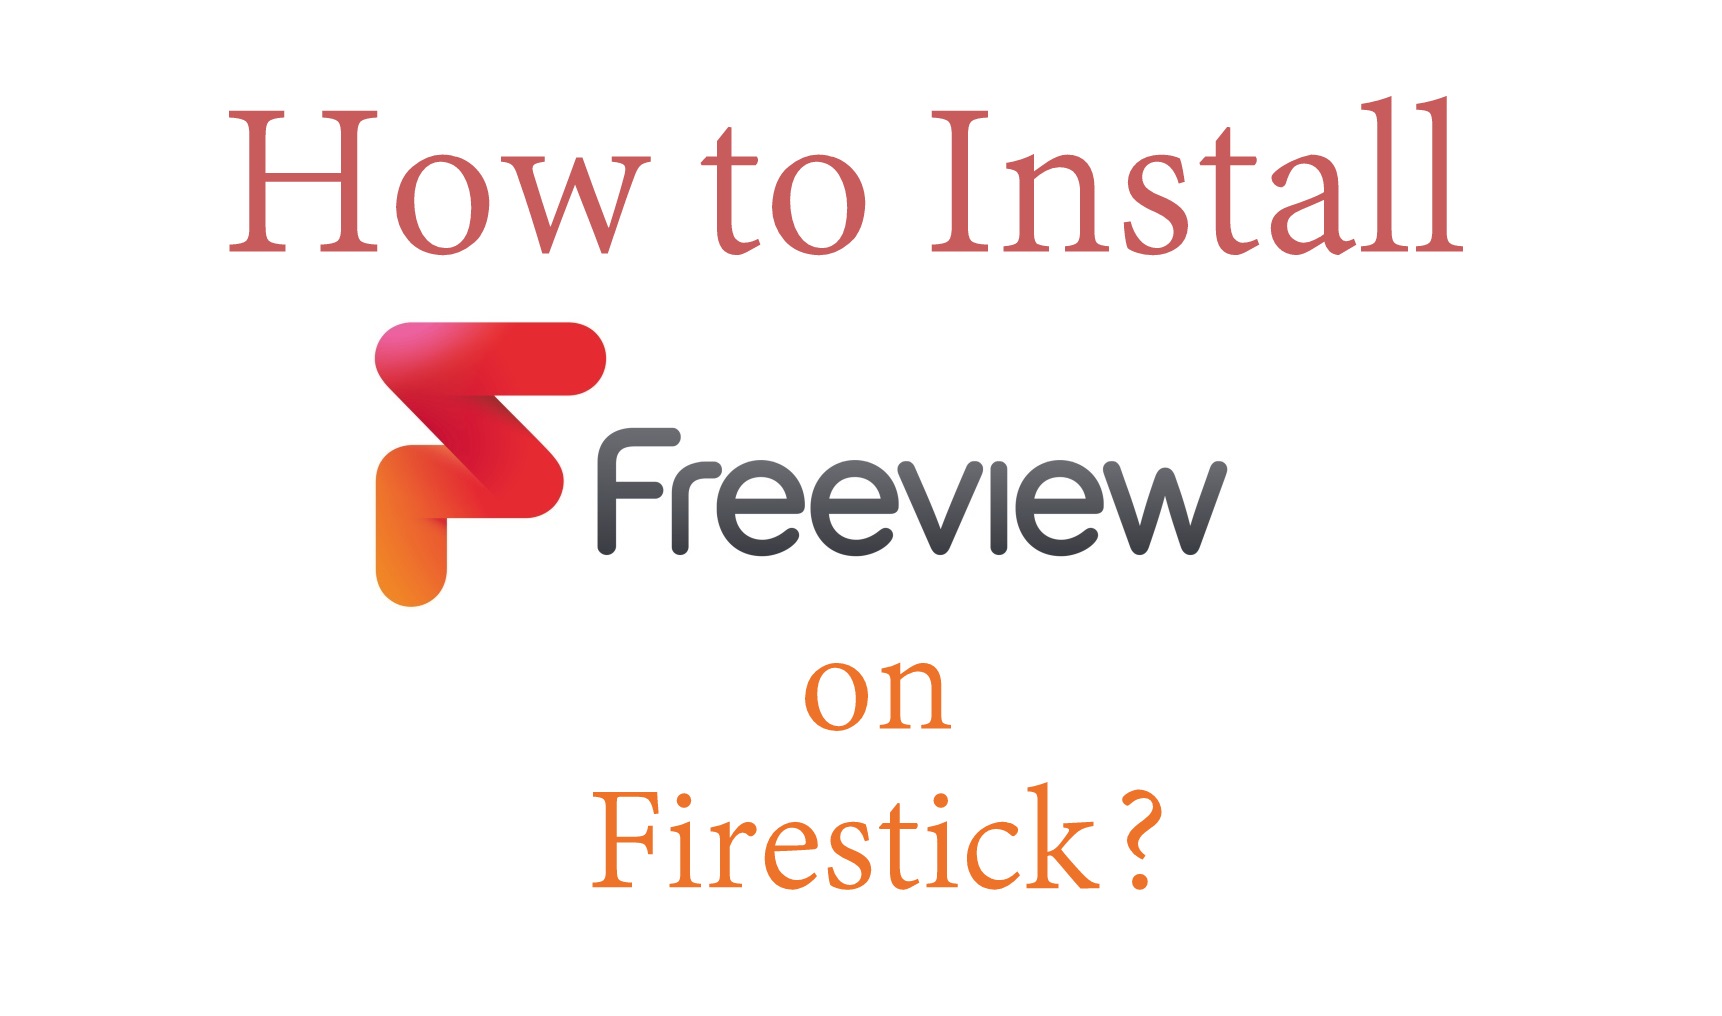 Cara menginstal Freeview di Firestick / Fire TV [2020] 4